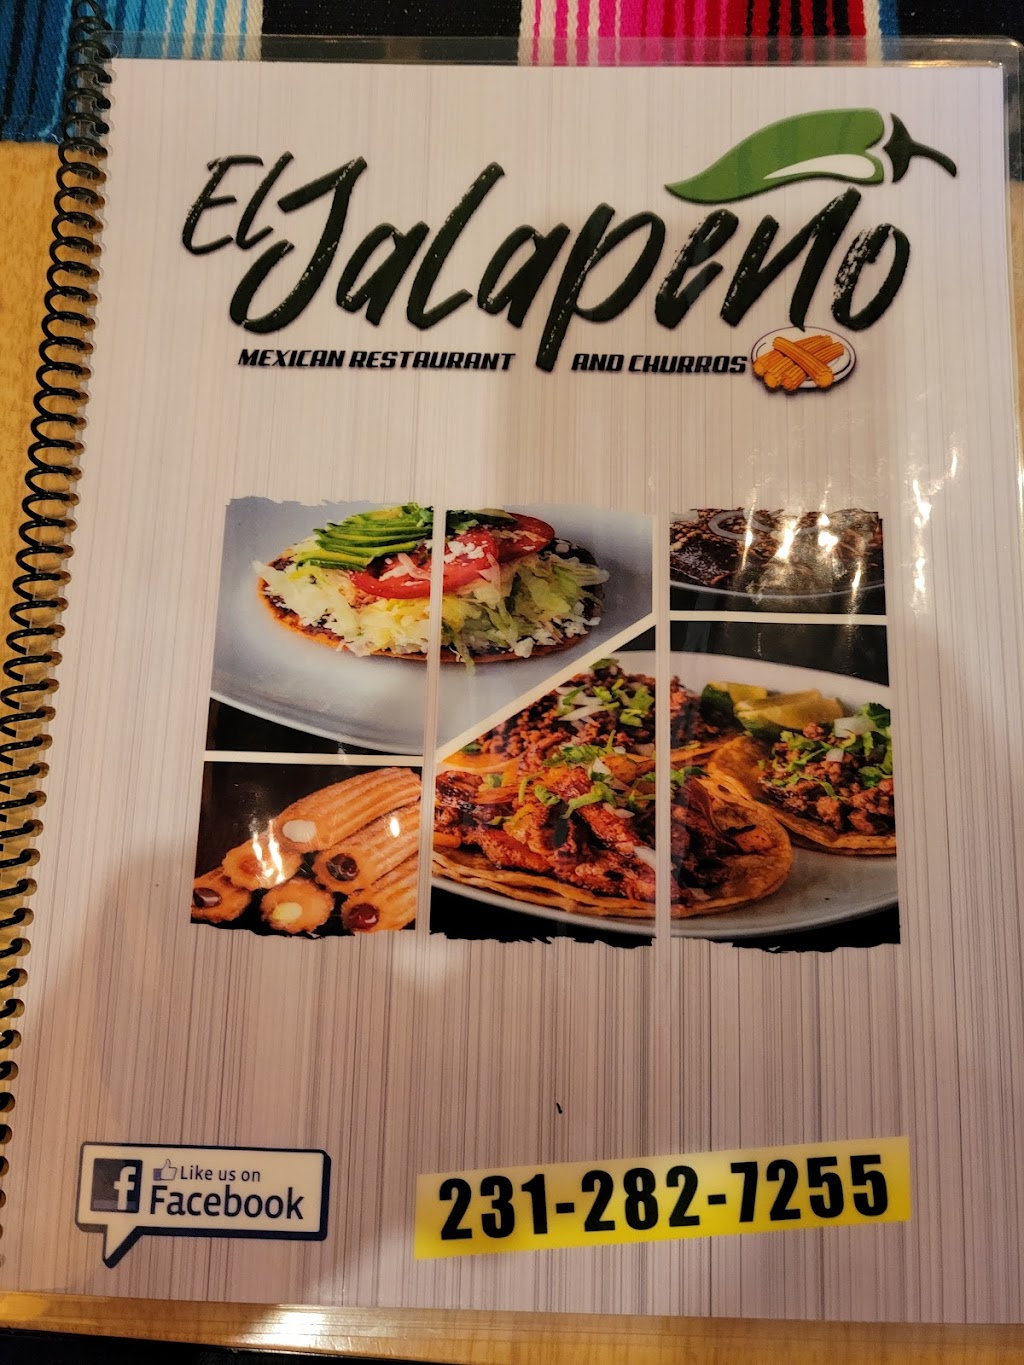 El Jalapeno | restaurant | 21 W Main St, Grant, MI 49327, USA | 2312827255 OR +1 231-282-7255